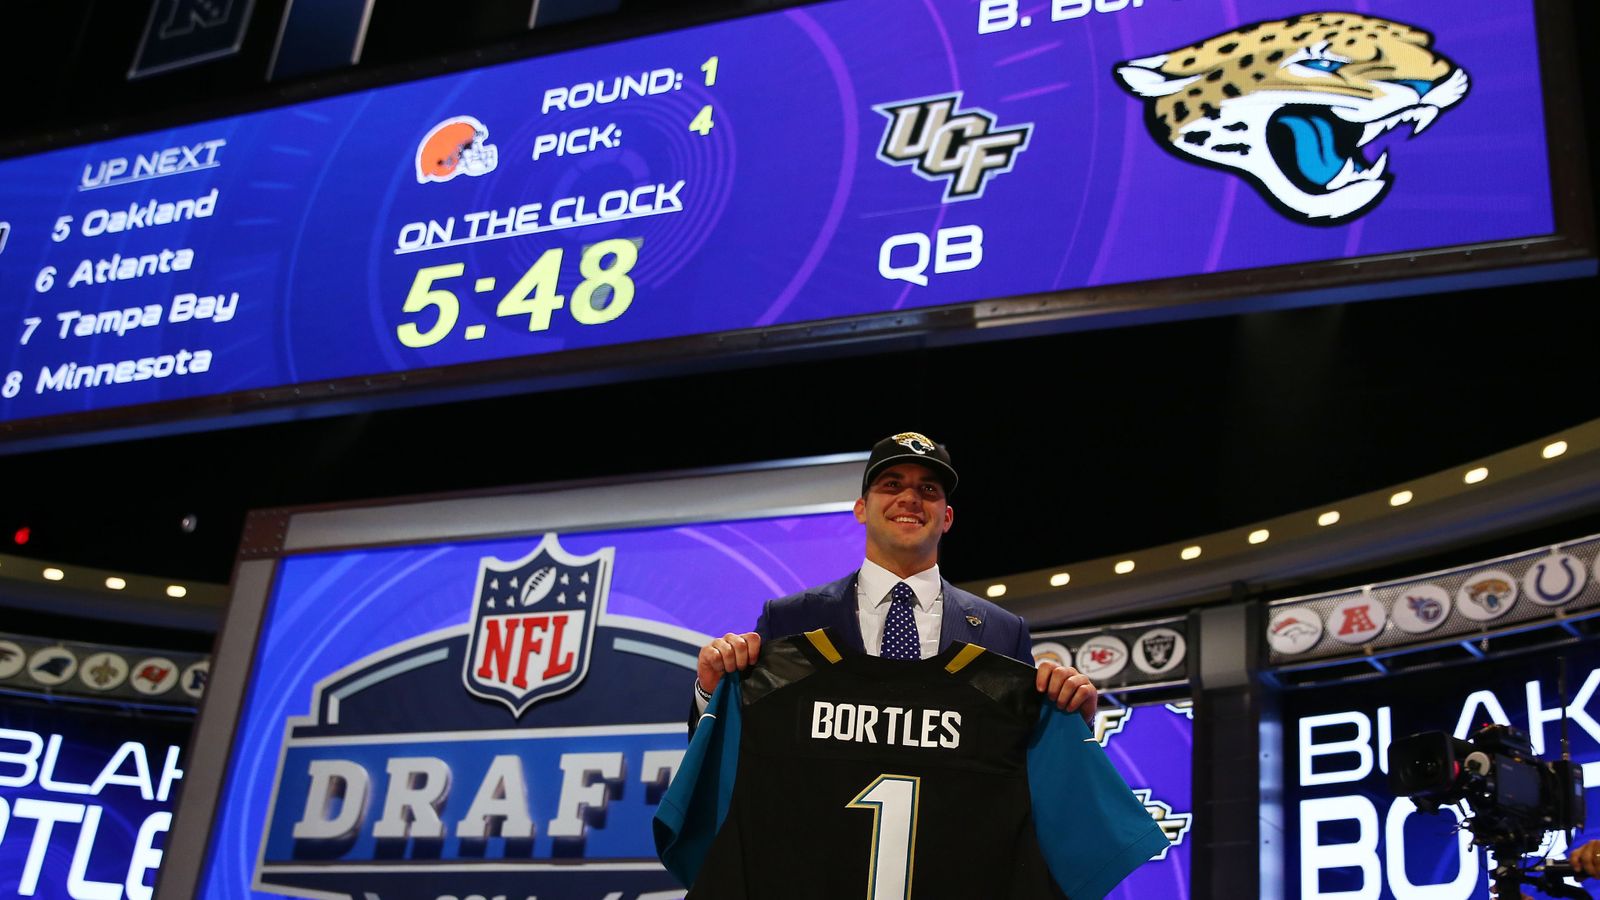 Jacksonville Jaguars to reveal NFL Draft pick from London NFL News